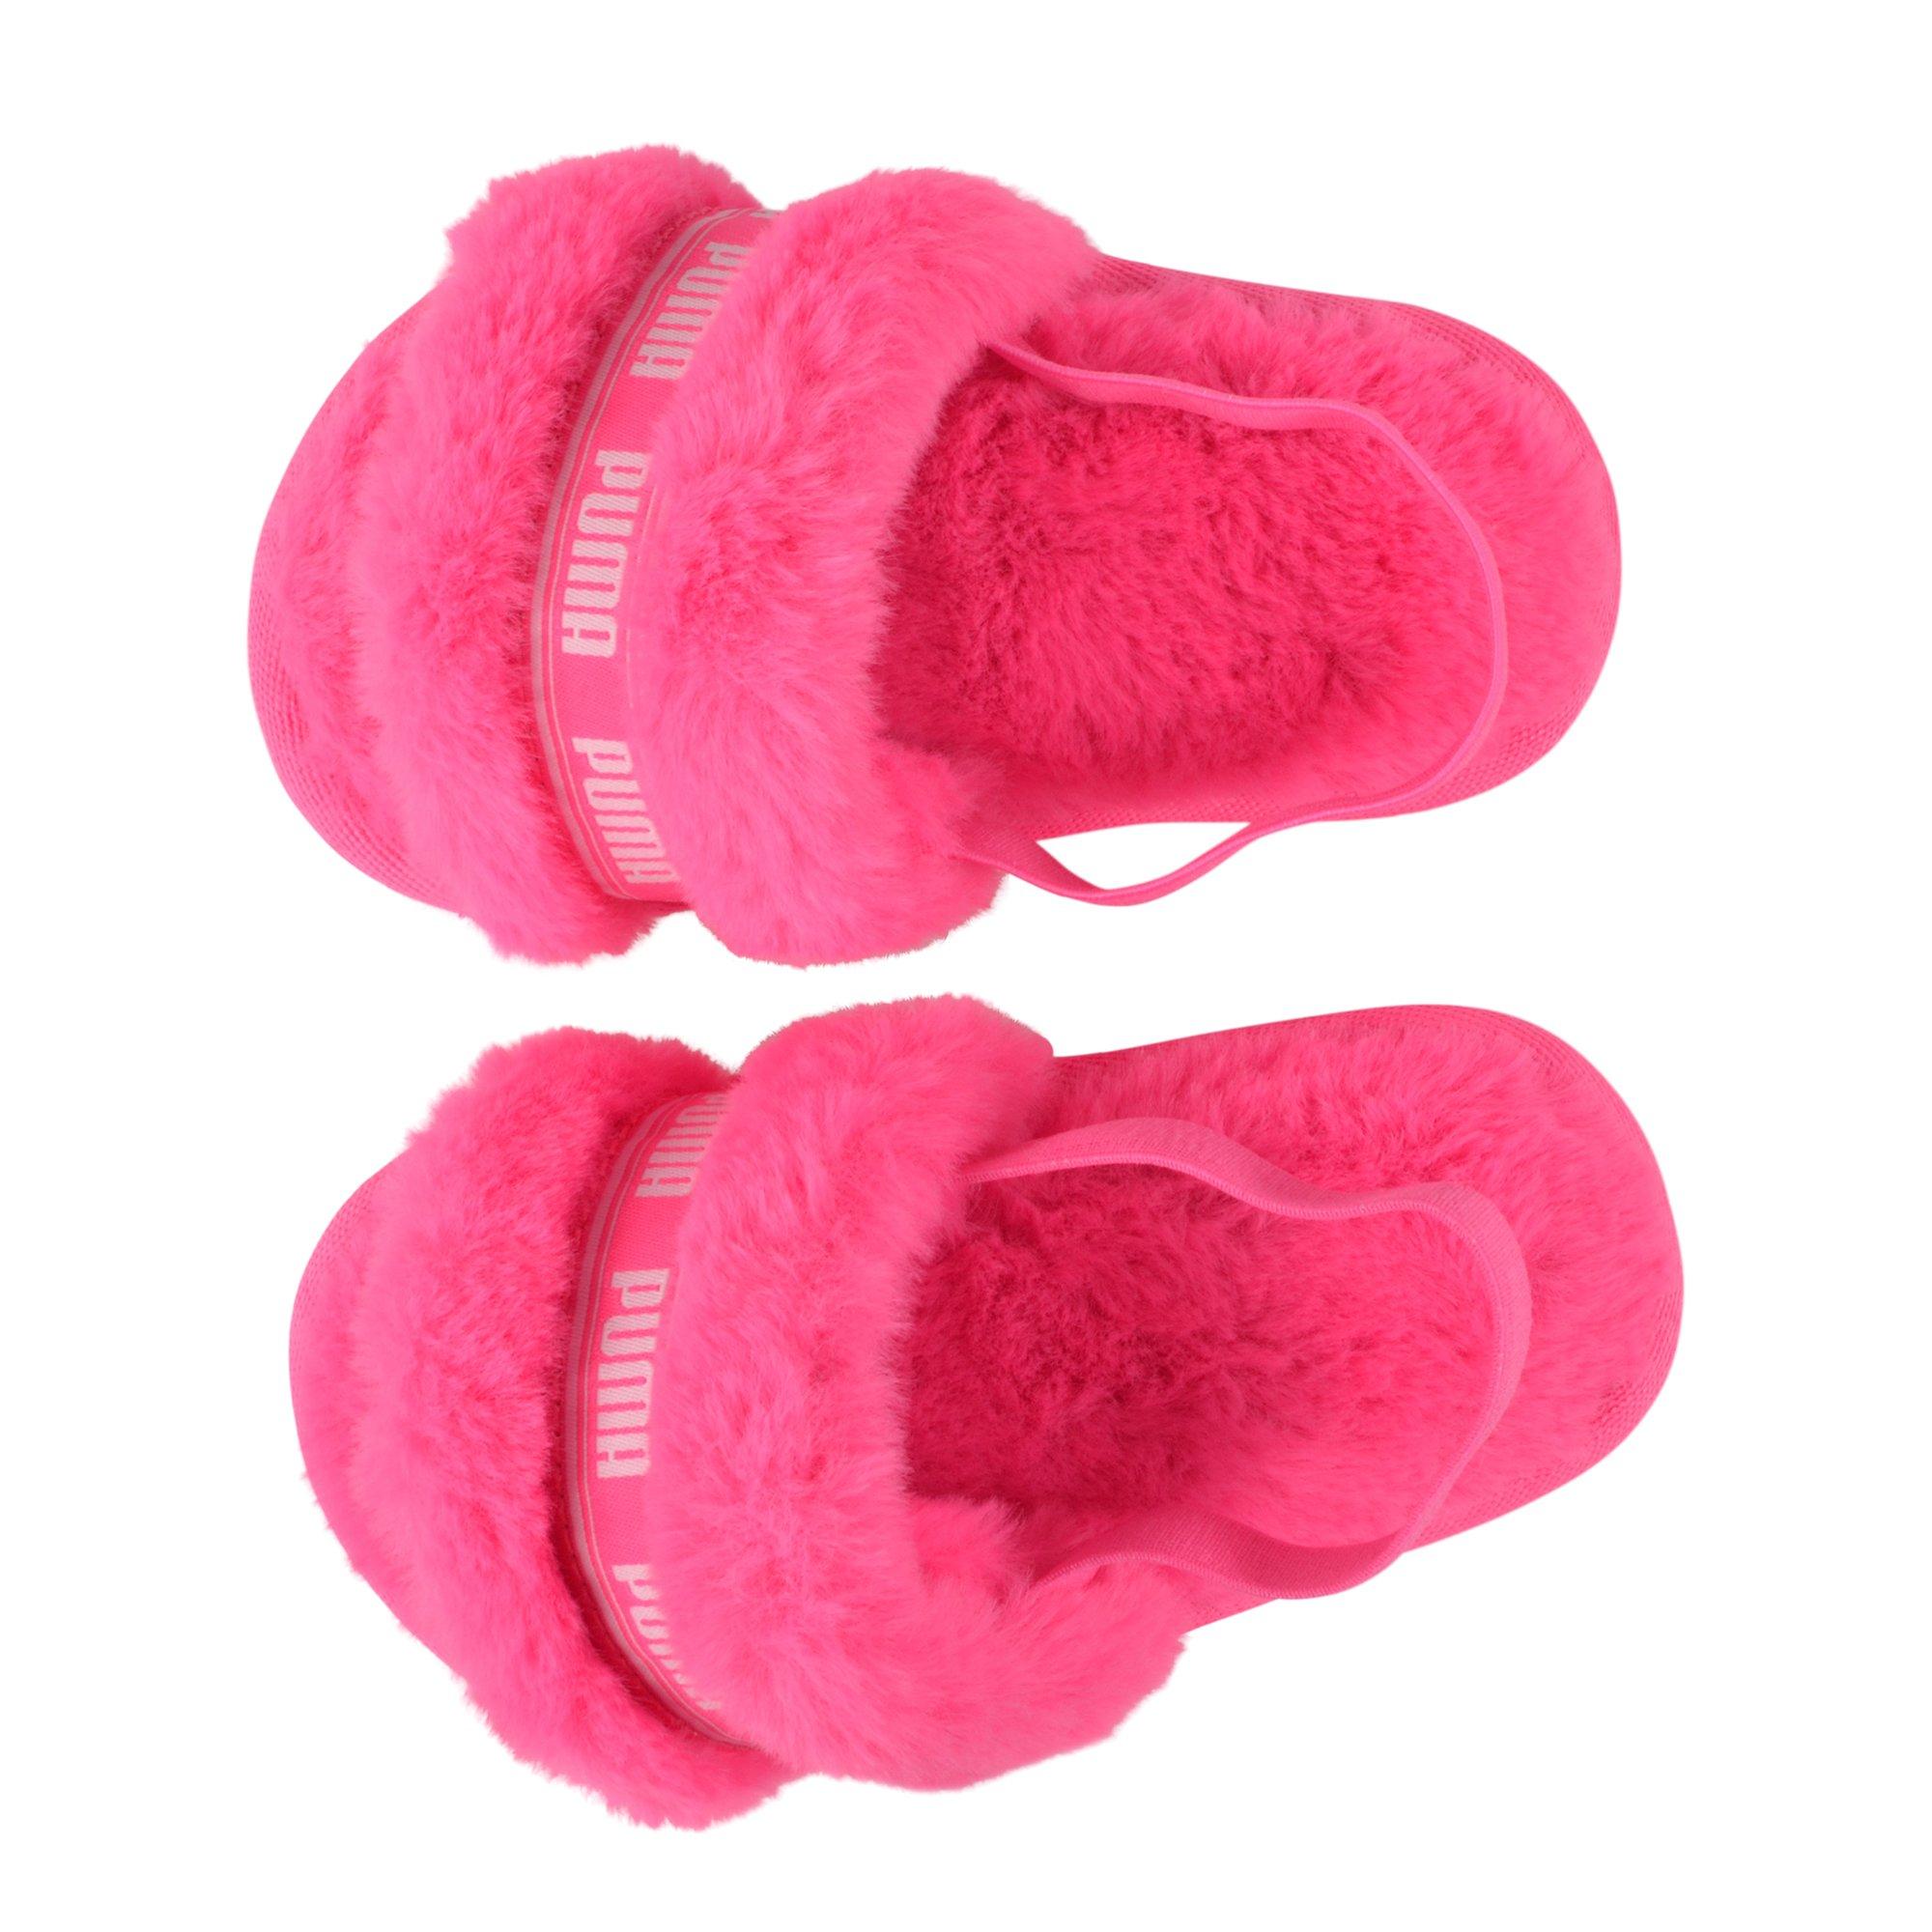 Schande Lijm salaris PUMA Fluff "Pink" Toddler Girls' Slide